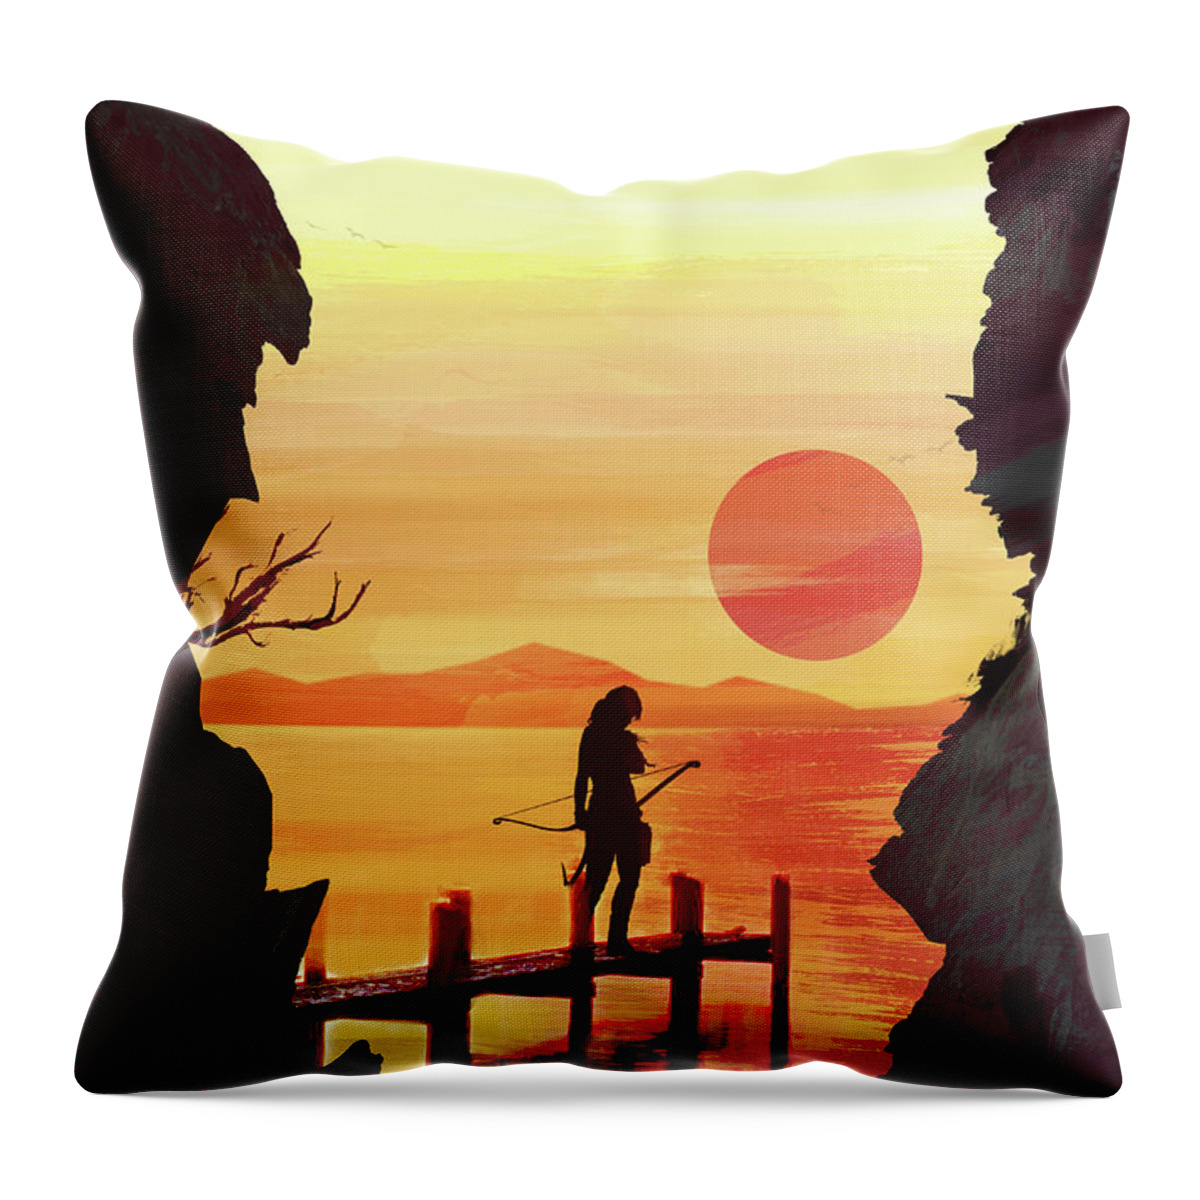 Tomb Raider Throw Pillow featuring the digital art Tomb Raider by IamLoudness Studio